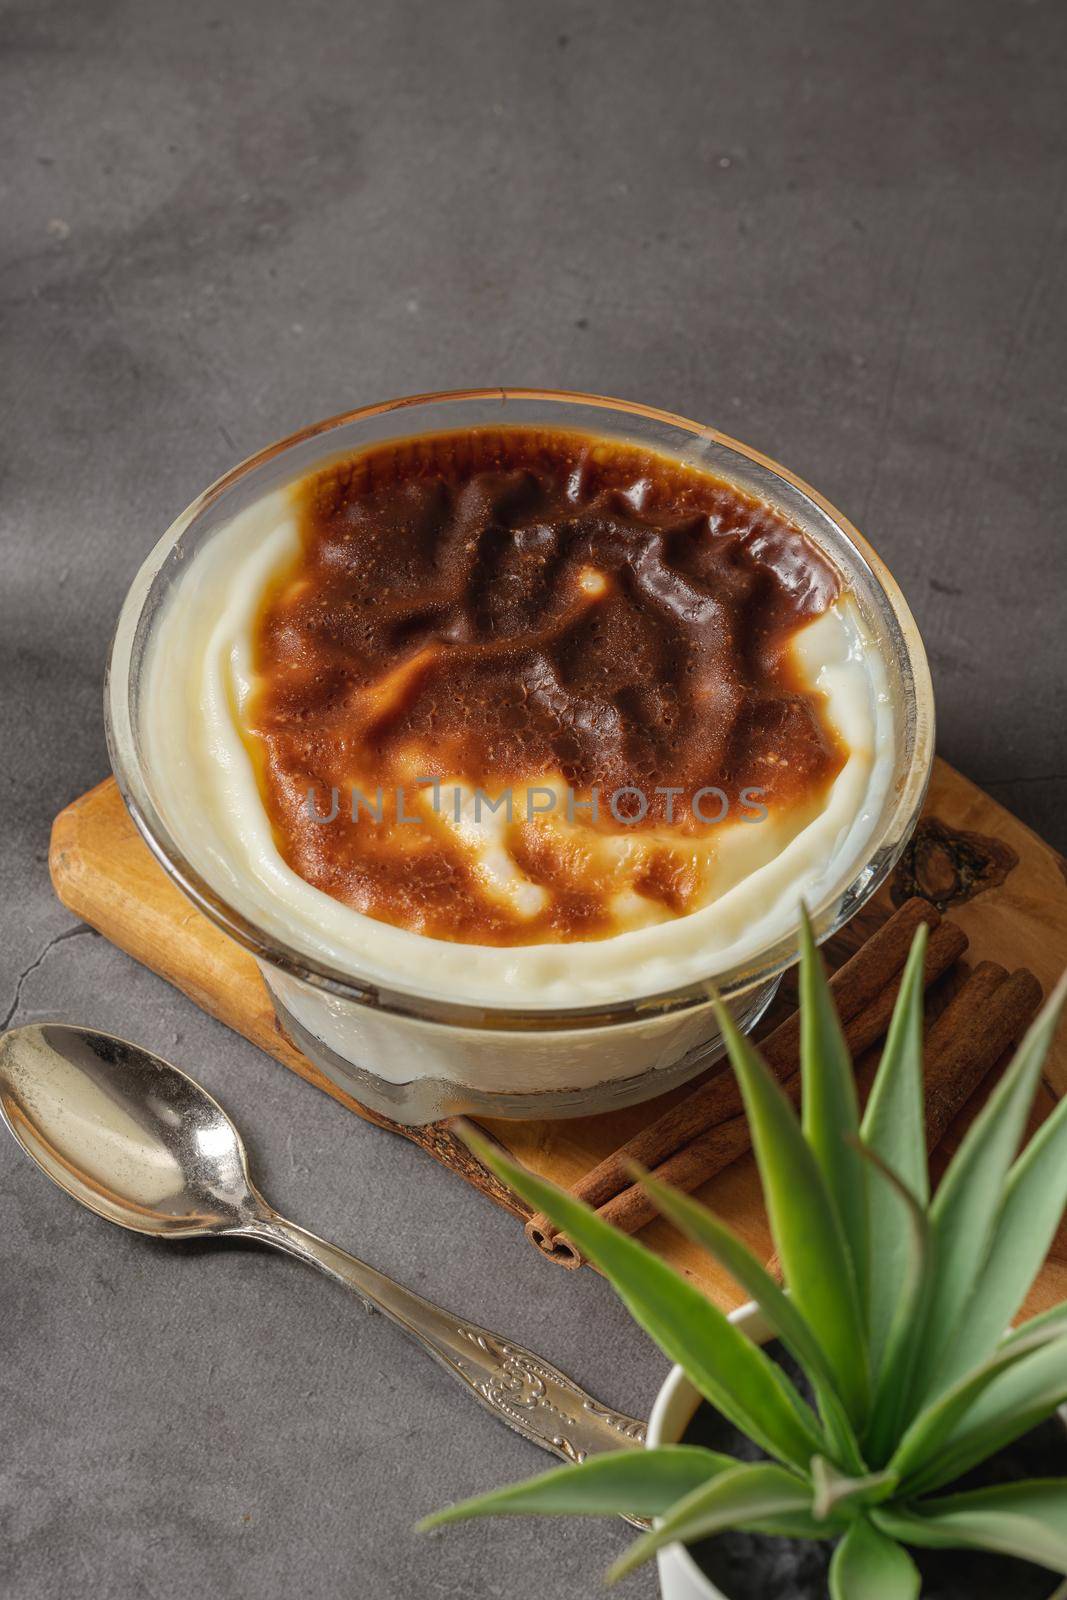 Traditional turkish dessert bakery rice pudding Turkish name Fırın Sutlac in glass bowl by Sonat